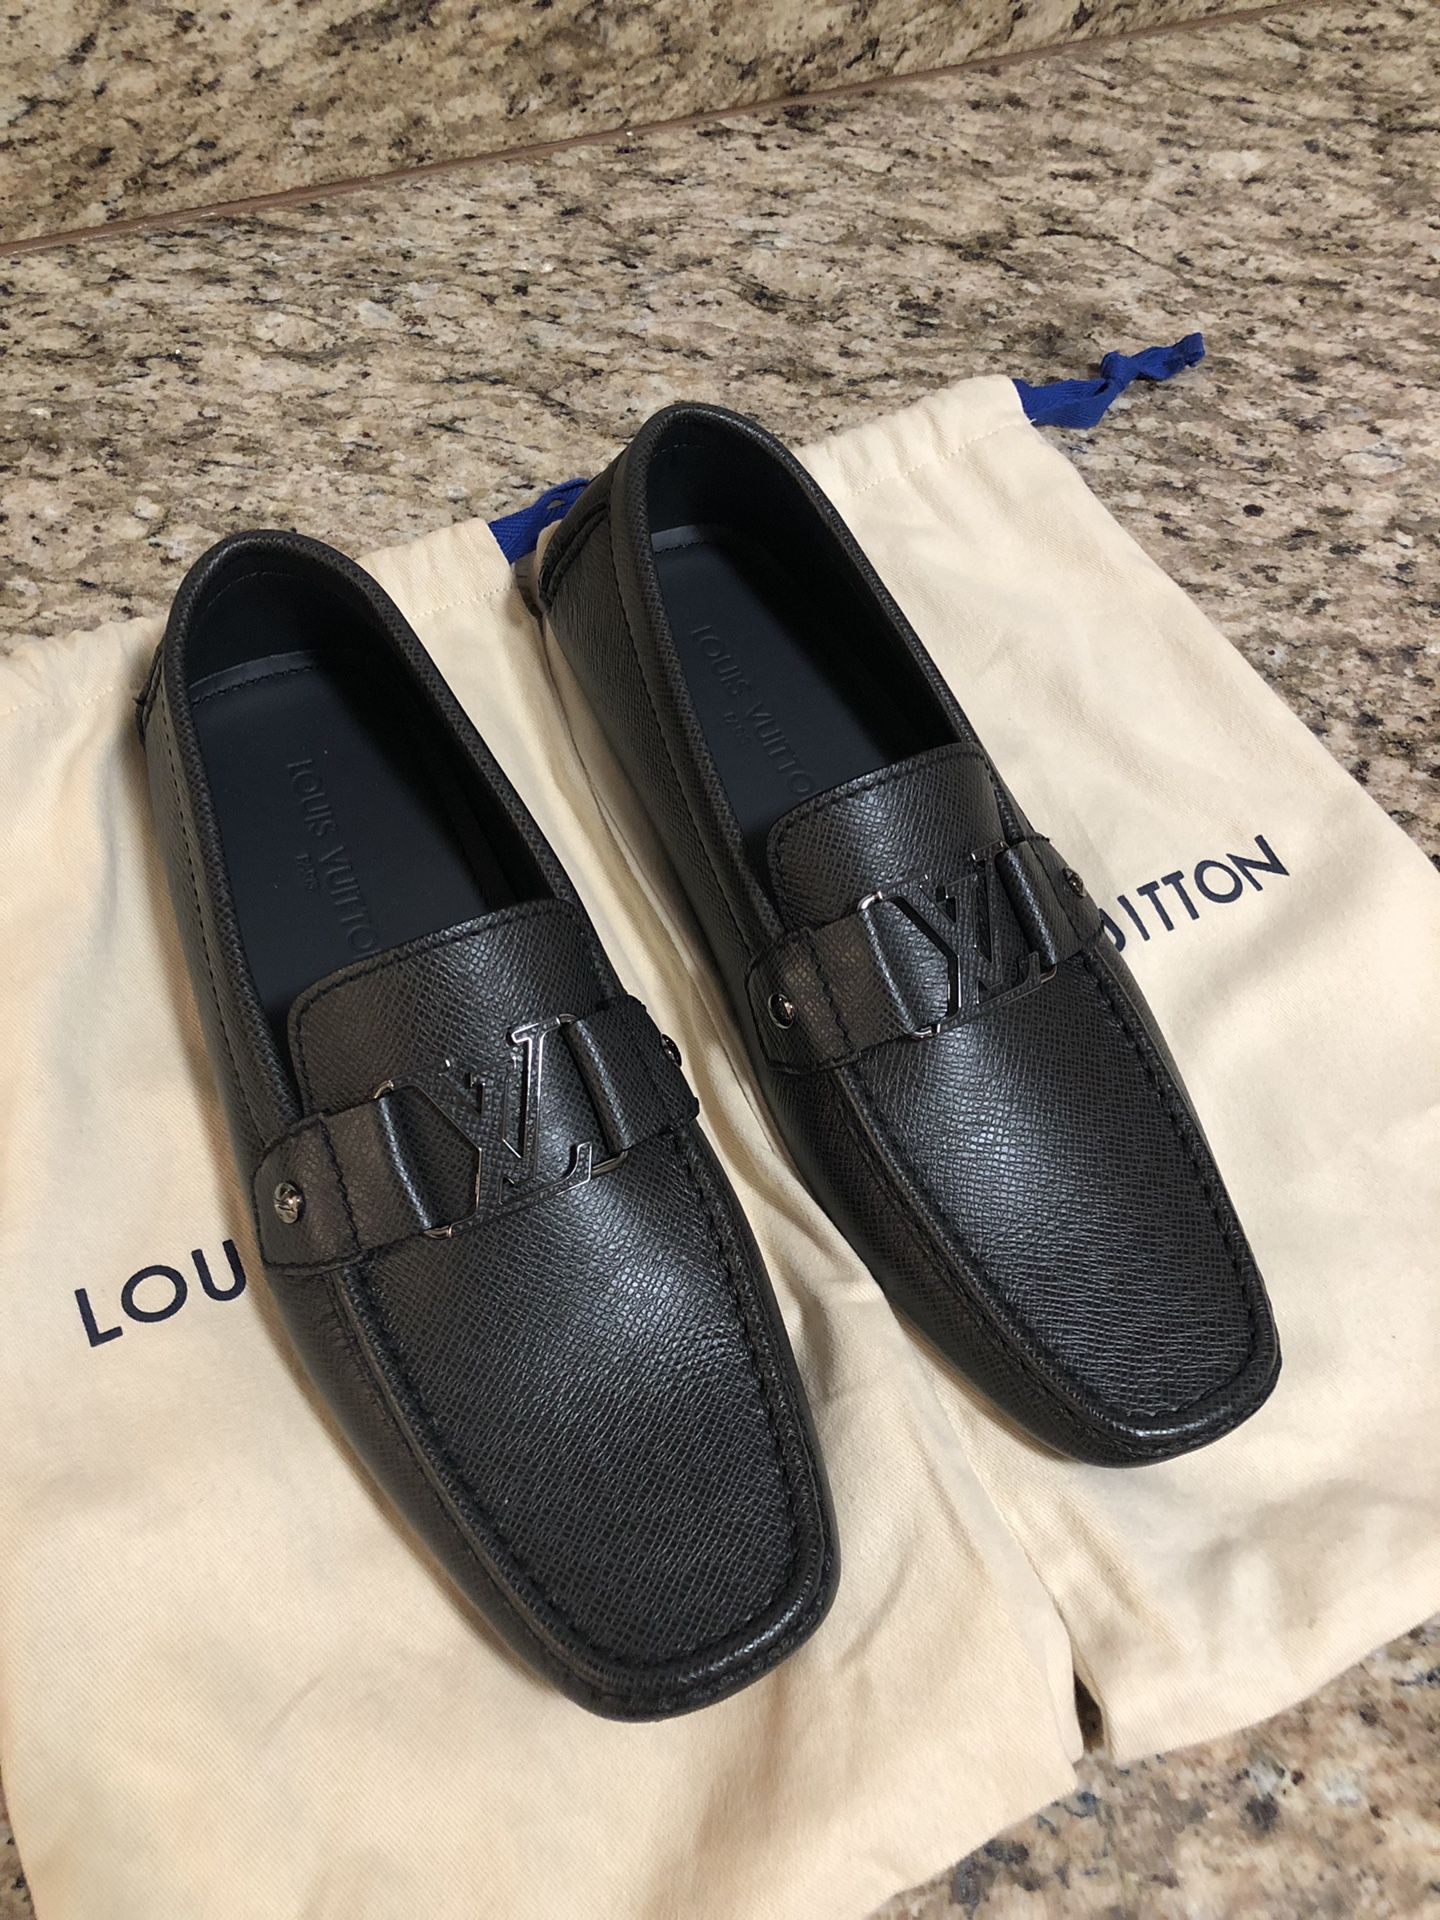 Louis Vuitton Monte Carlo Moccasin 9 for Sale in Miami, FL - OfferUp